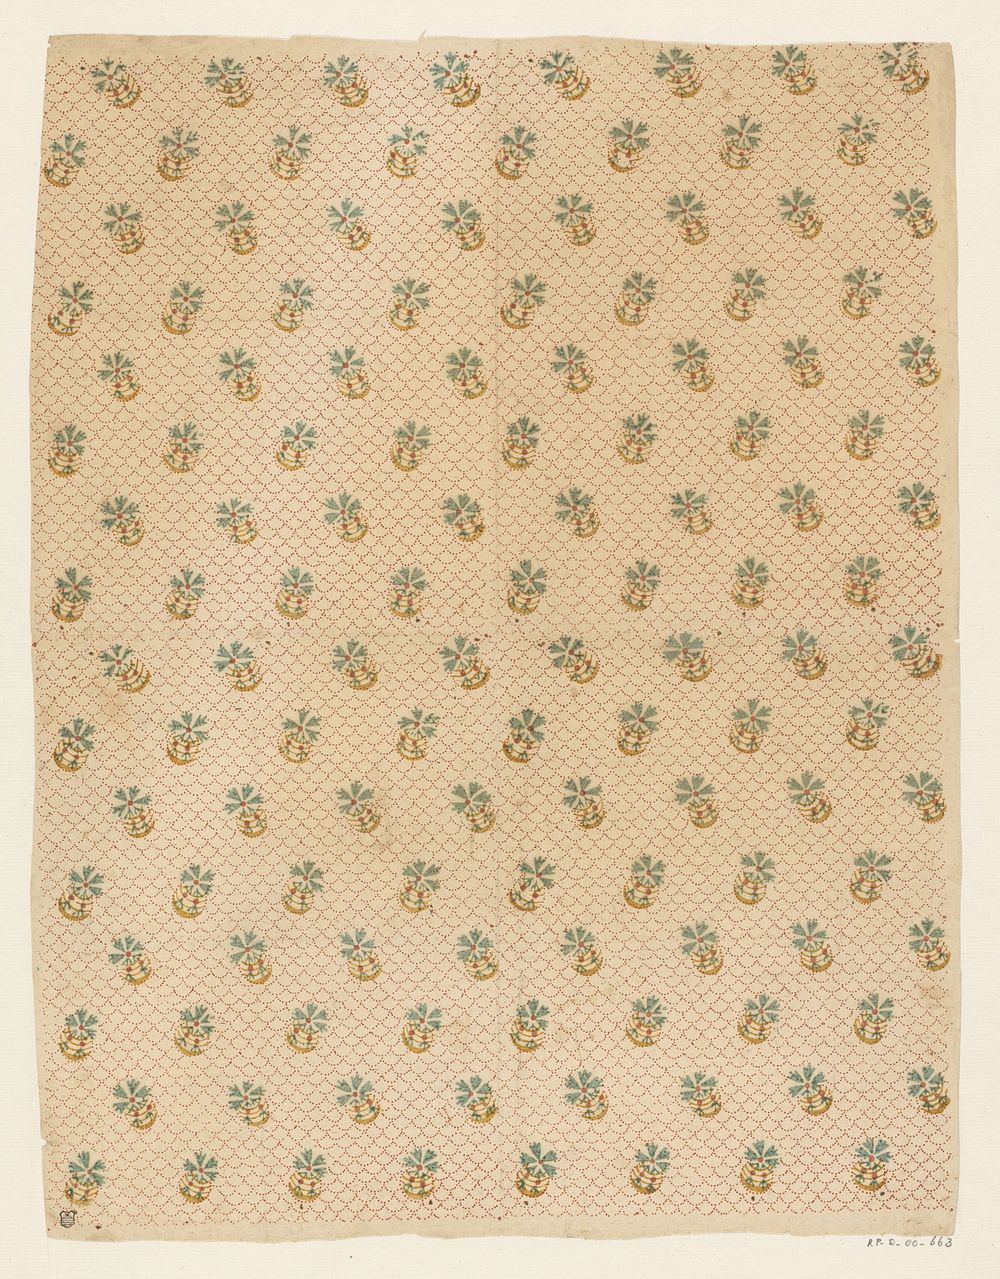 Blad met strooipatroon van bloemmotief op een puntenfond (1750 - 1900) by anonymous